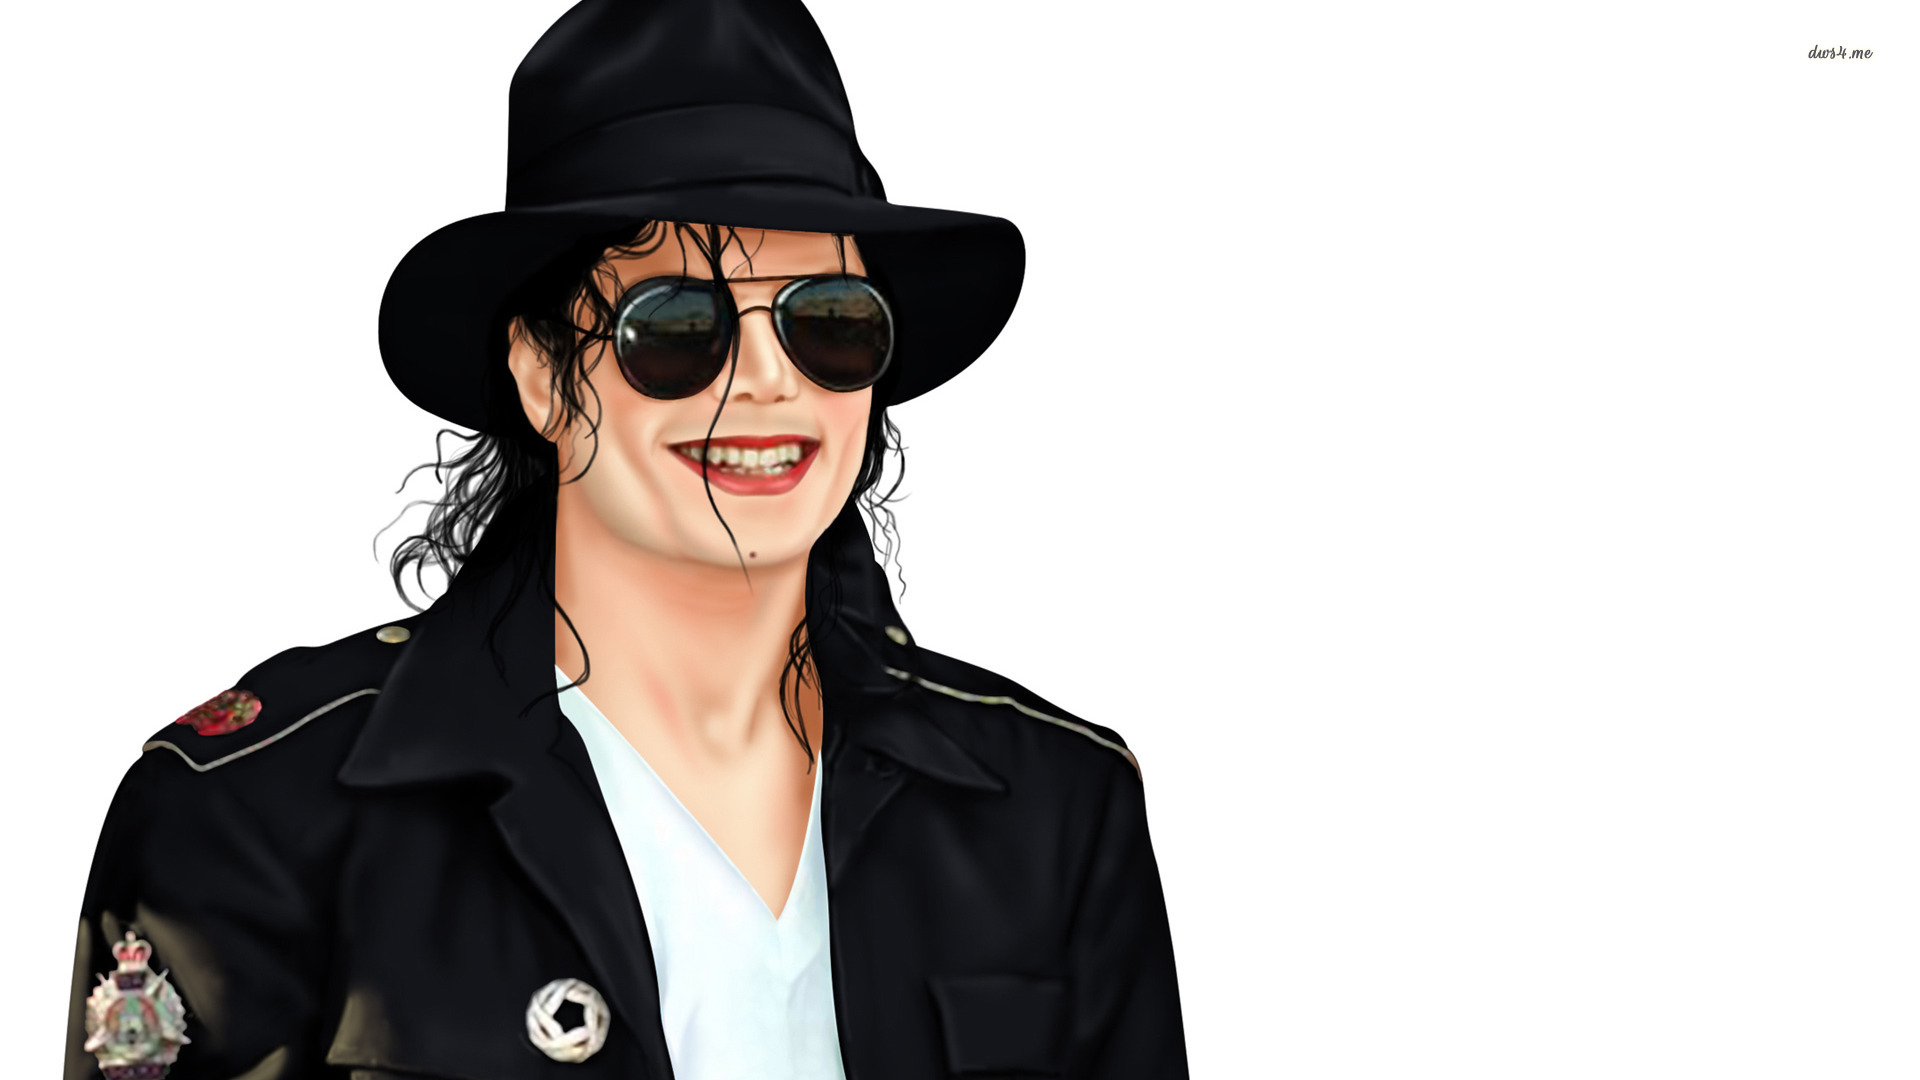 Michael Jackson Hd Image Download - HD Wallpaper 